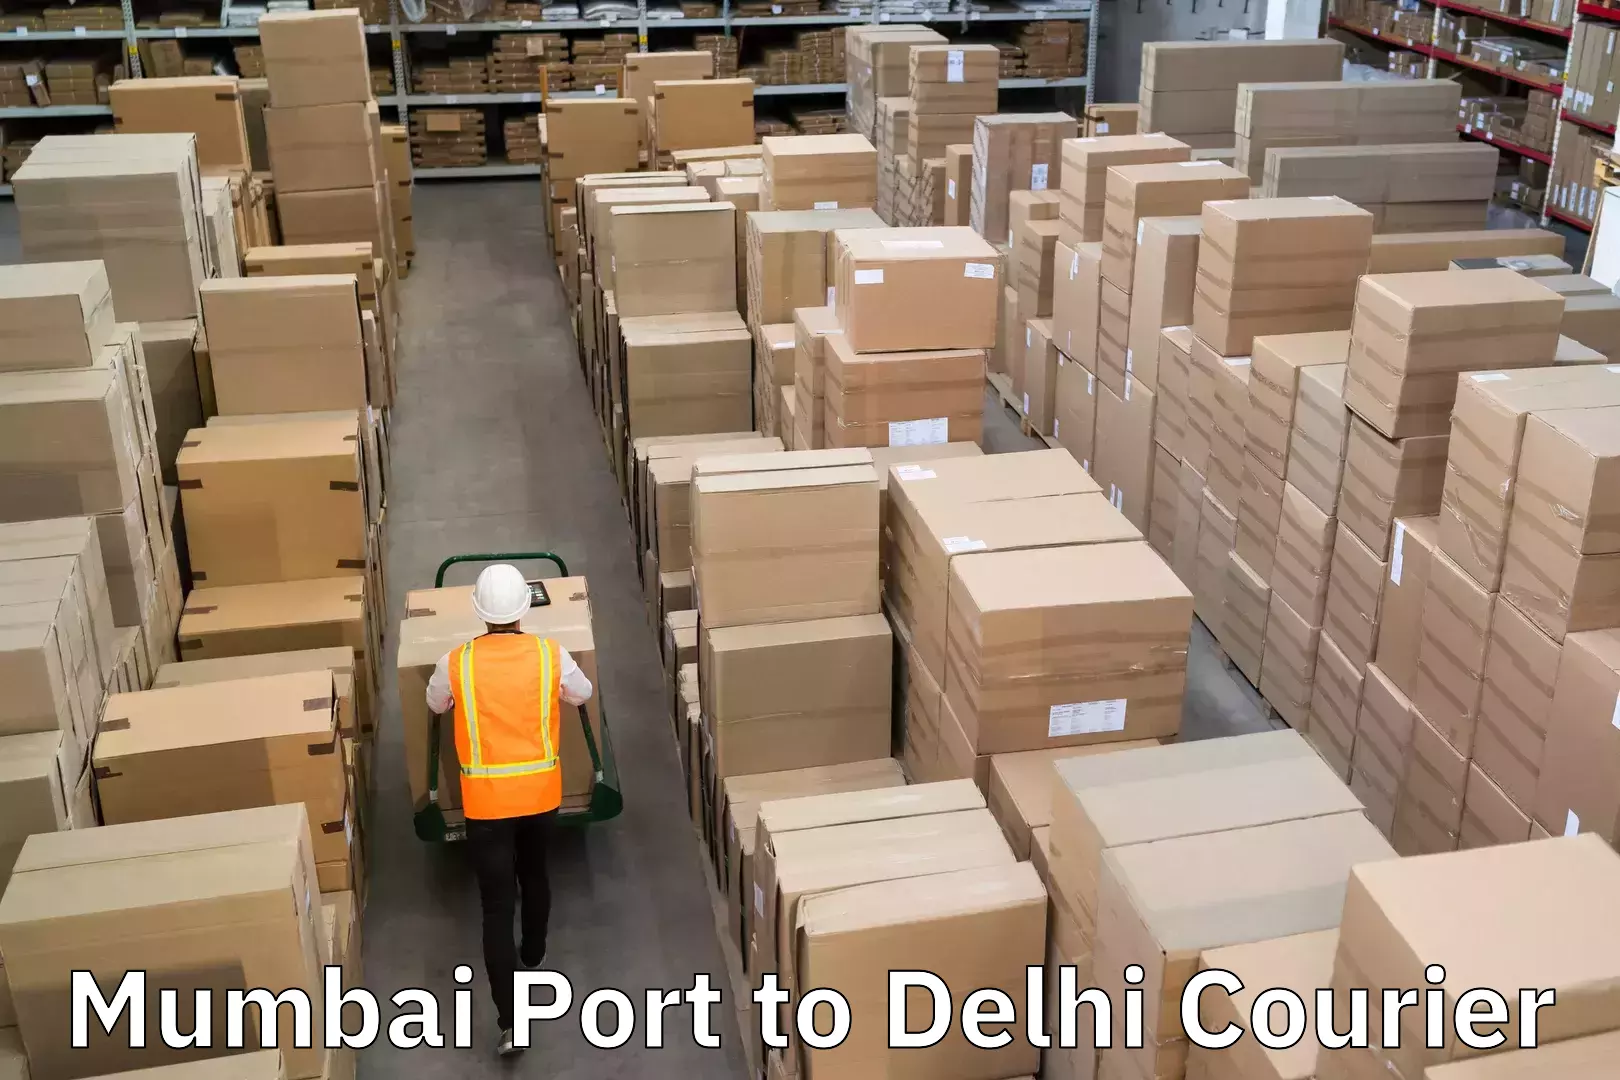 Cargo delivery service Mumbai Port to Delhi